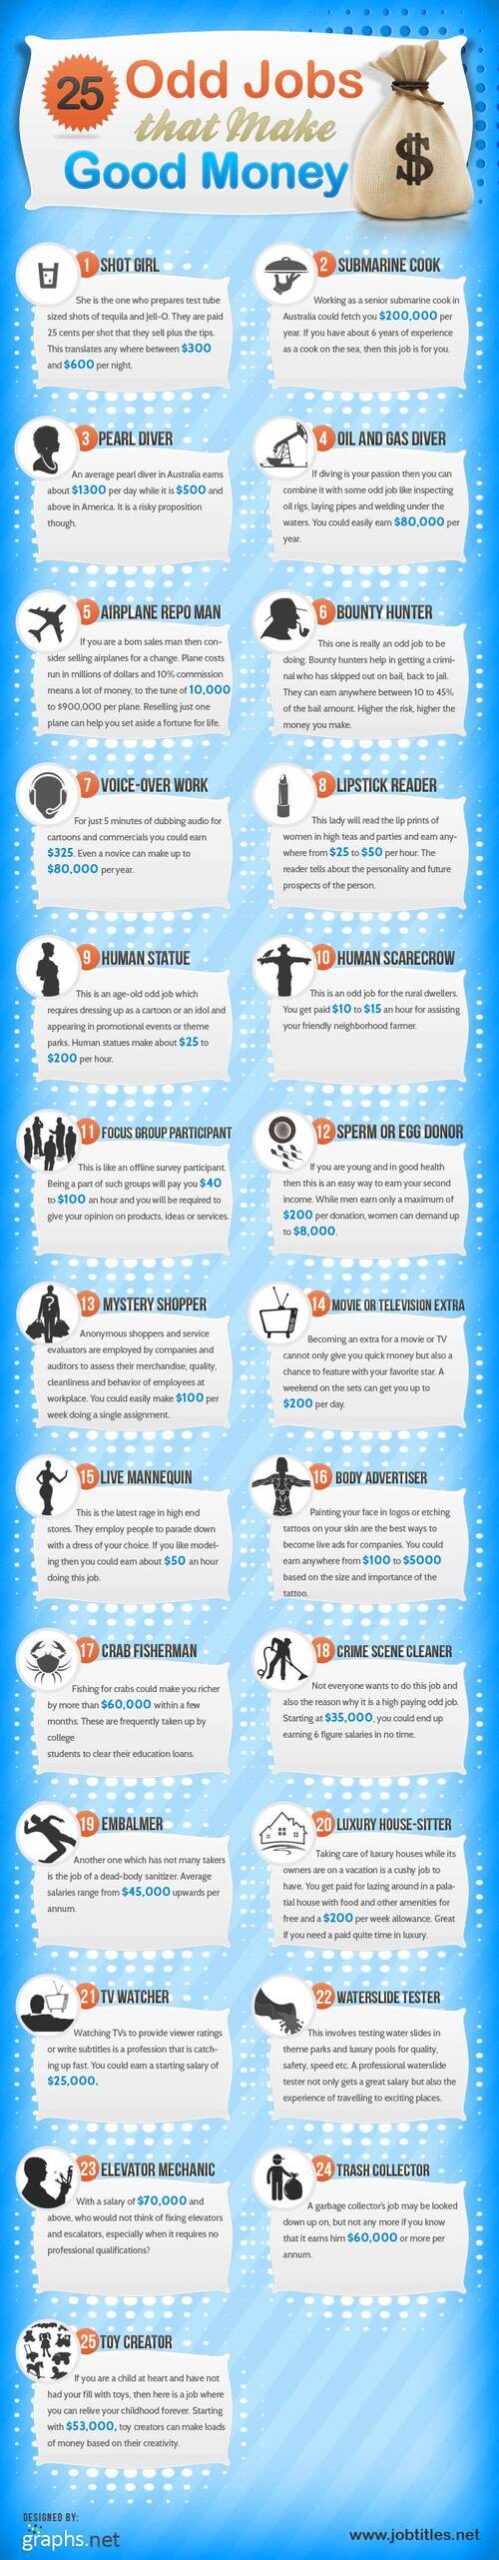 odd jobs that make money infographic